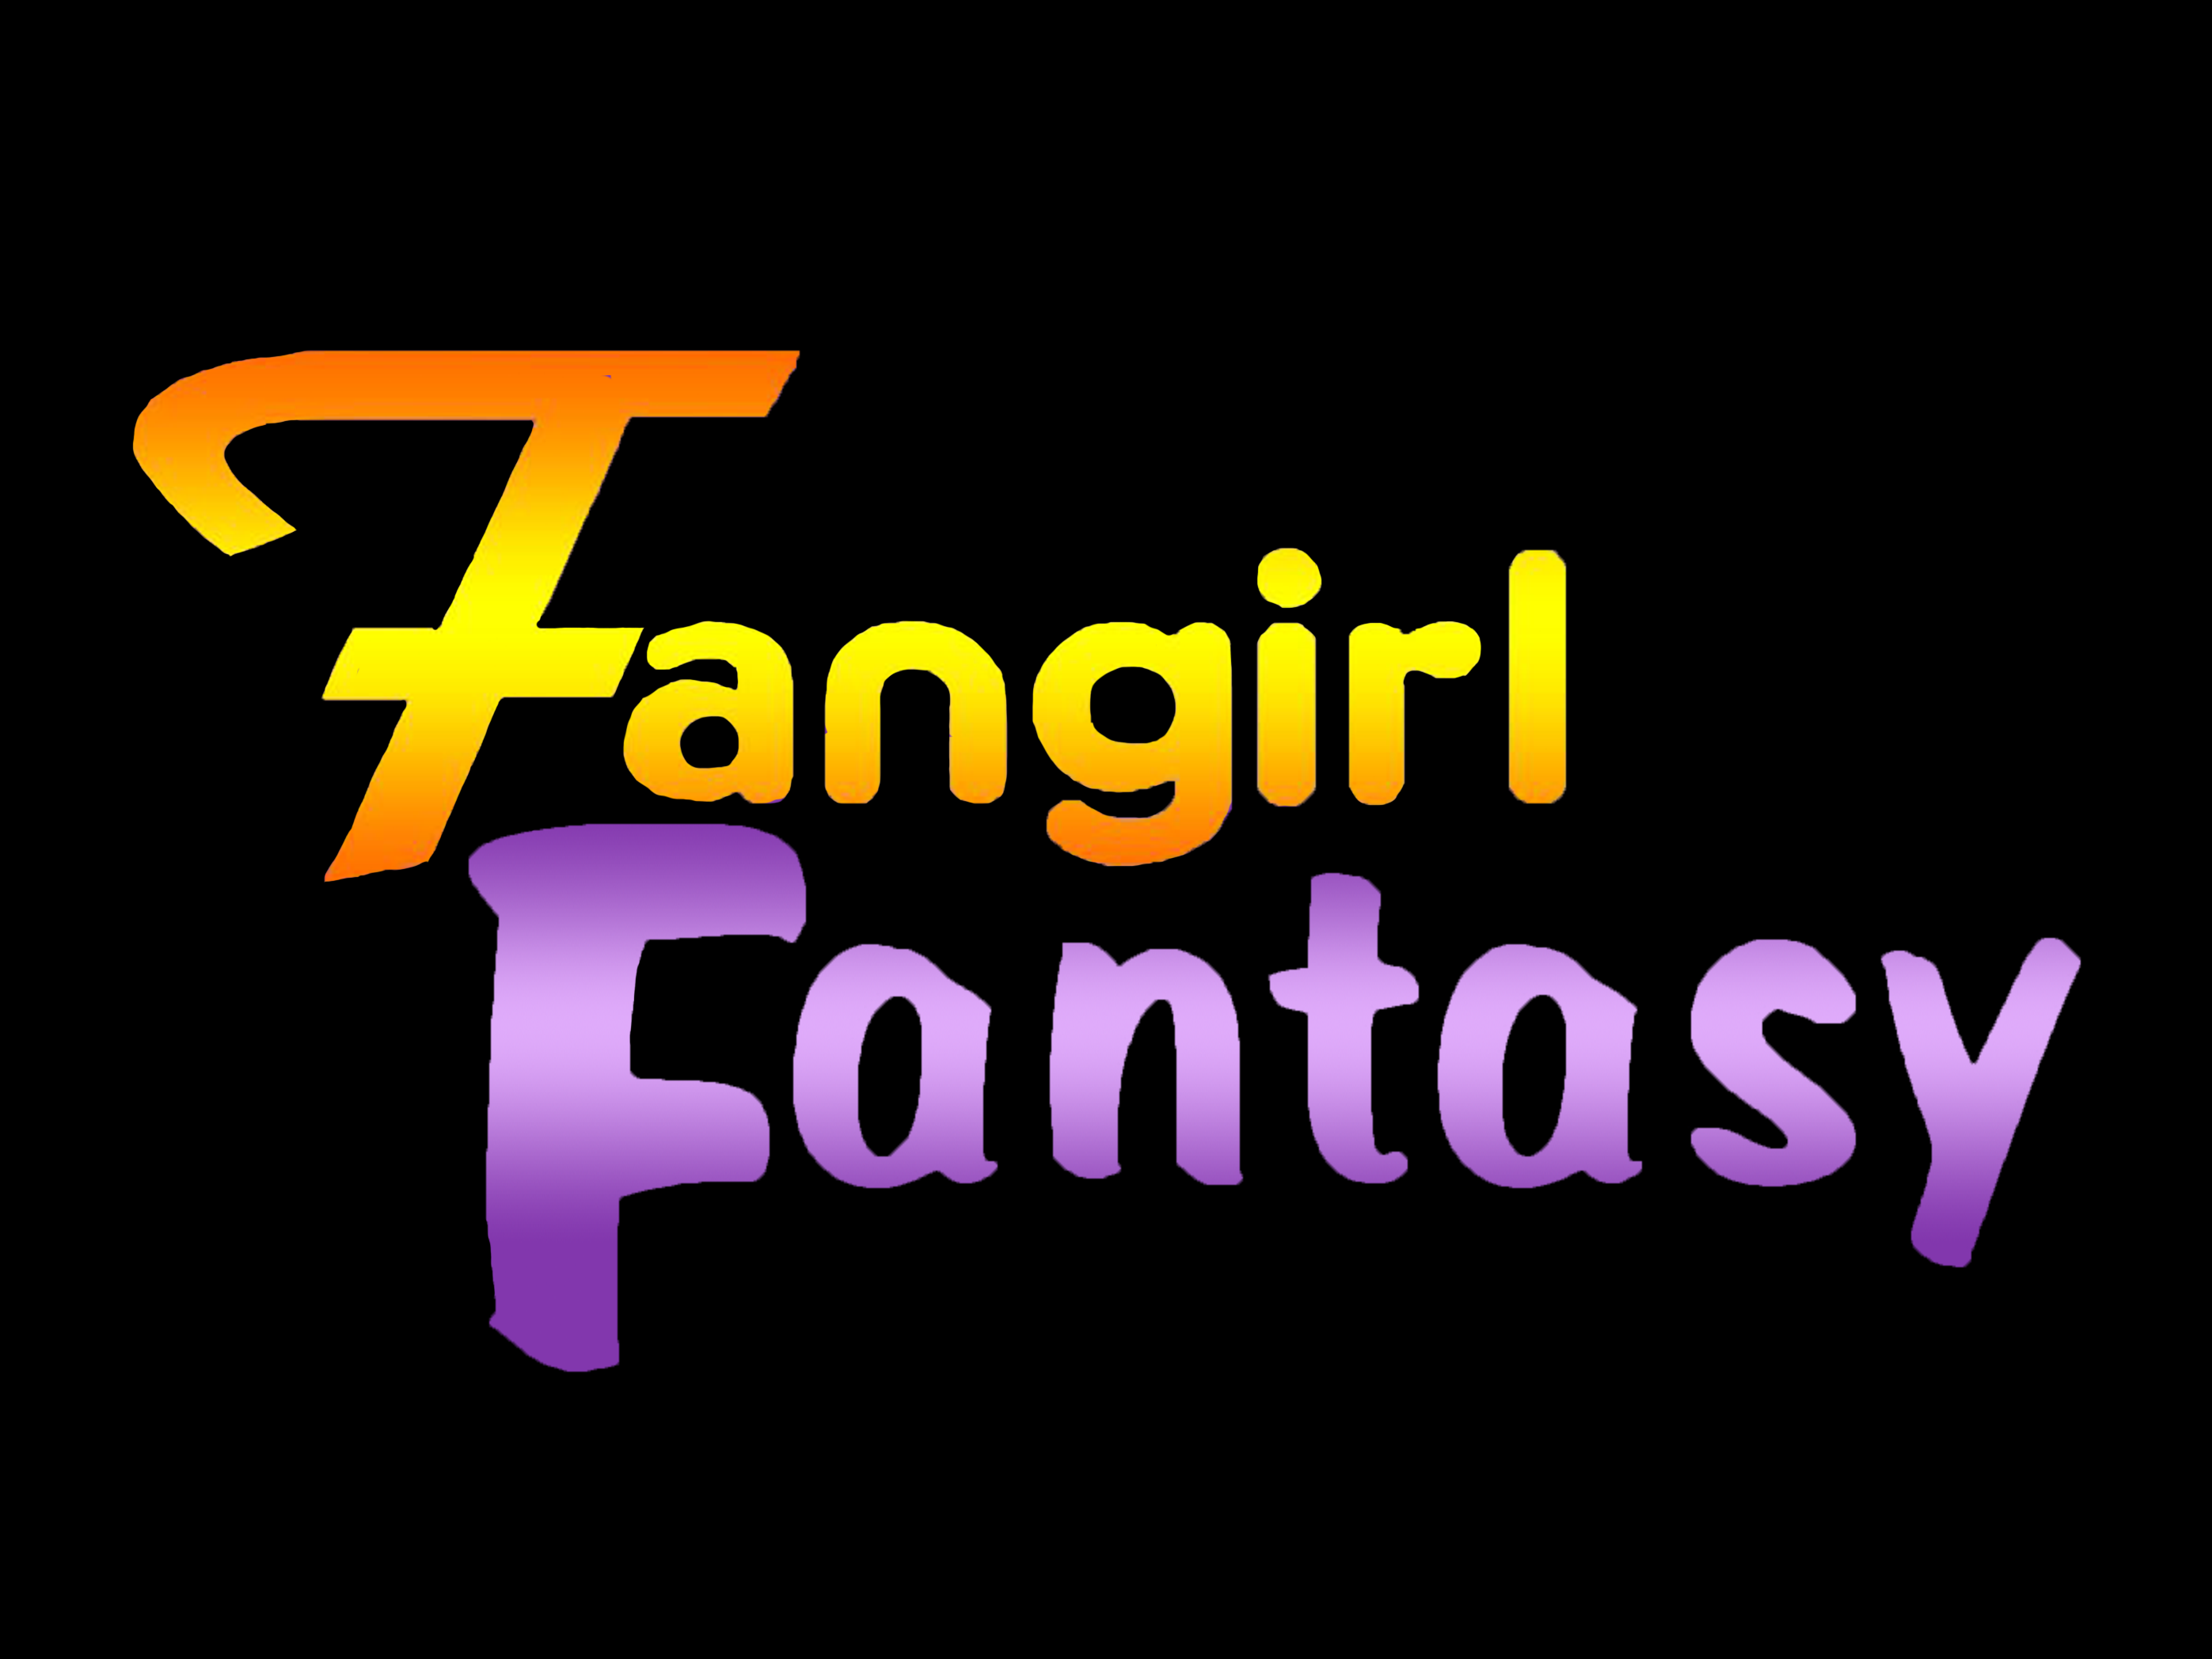 Fangirl Fantasy: Taylor Swift vs Olivia Rodrigo Dance Night